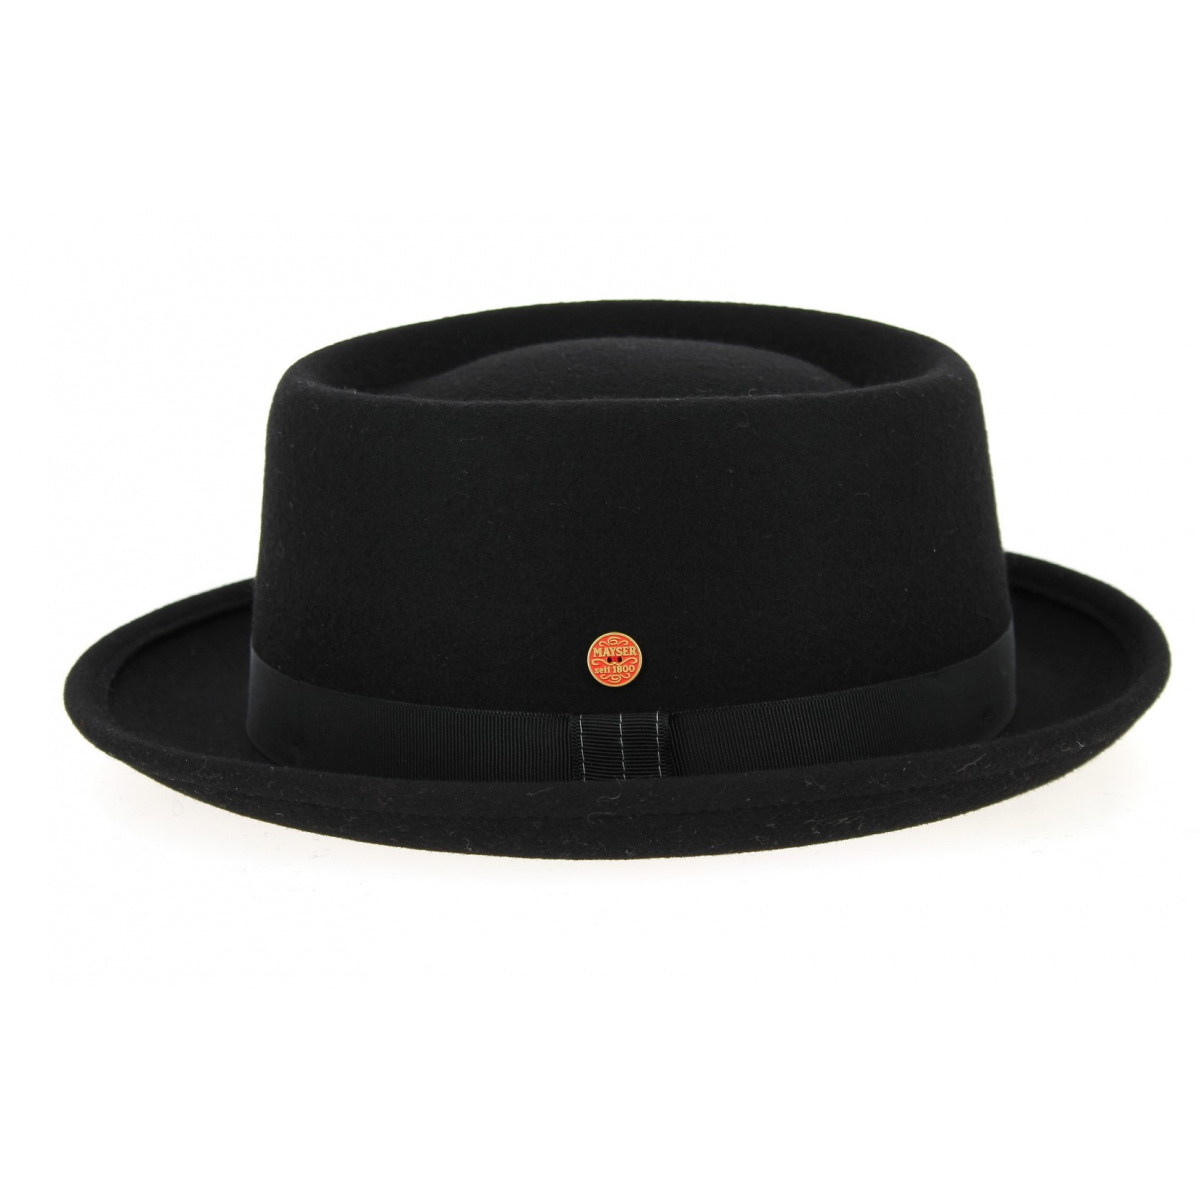 Ronald Black Wool Felt Winter Fedora Trilby Hat